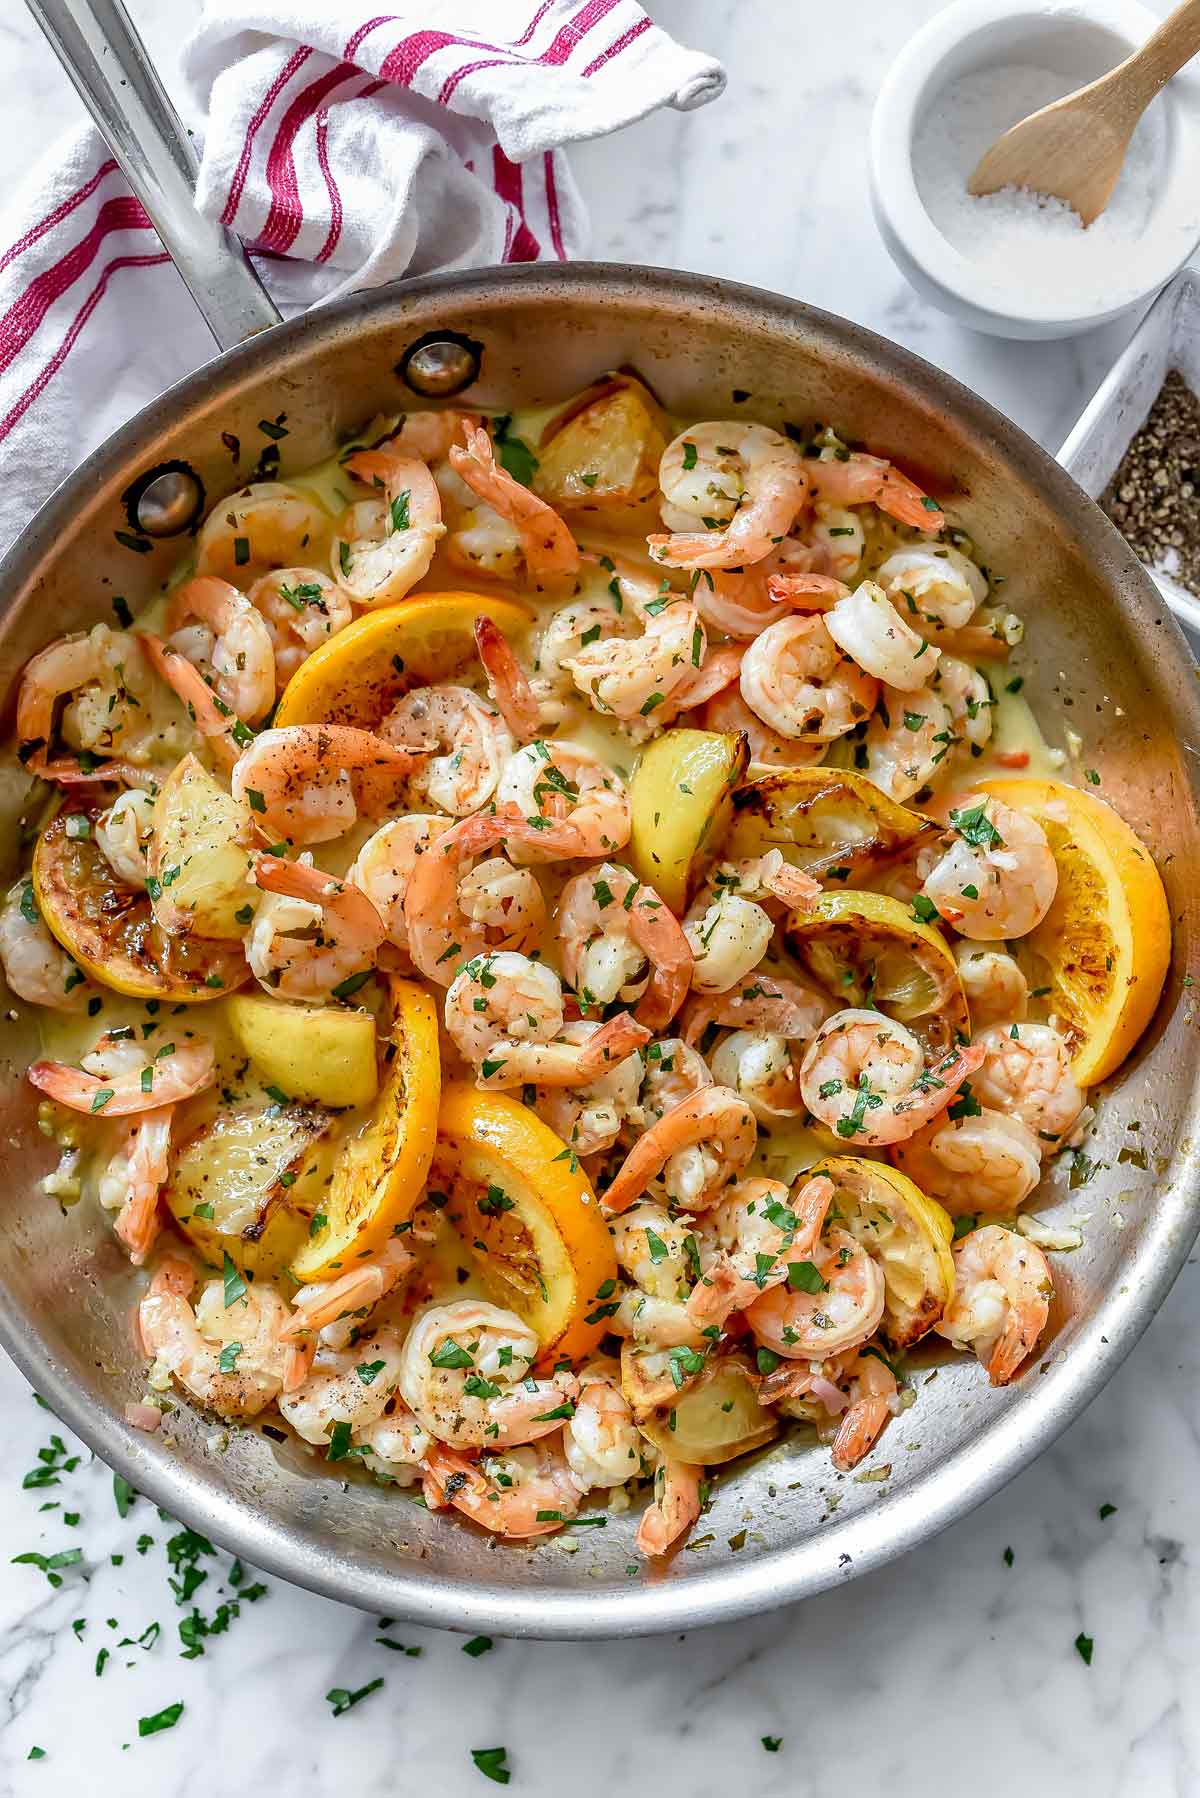 https://www.foodiecrush.com/wp-content/uploads/2017/07/Pan-Seared-Citrus-Shrimp-Recipe-foodiecrush.com-009-2.jpg